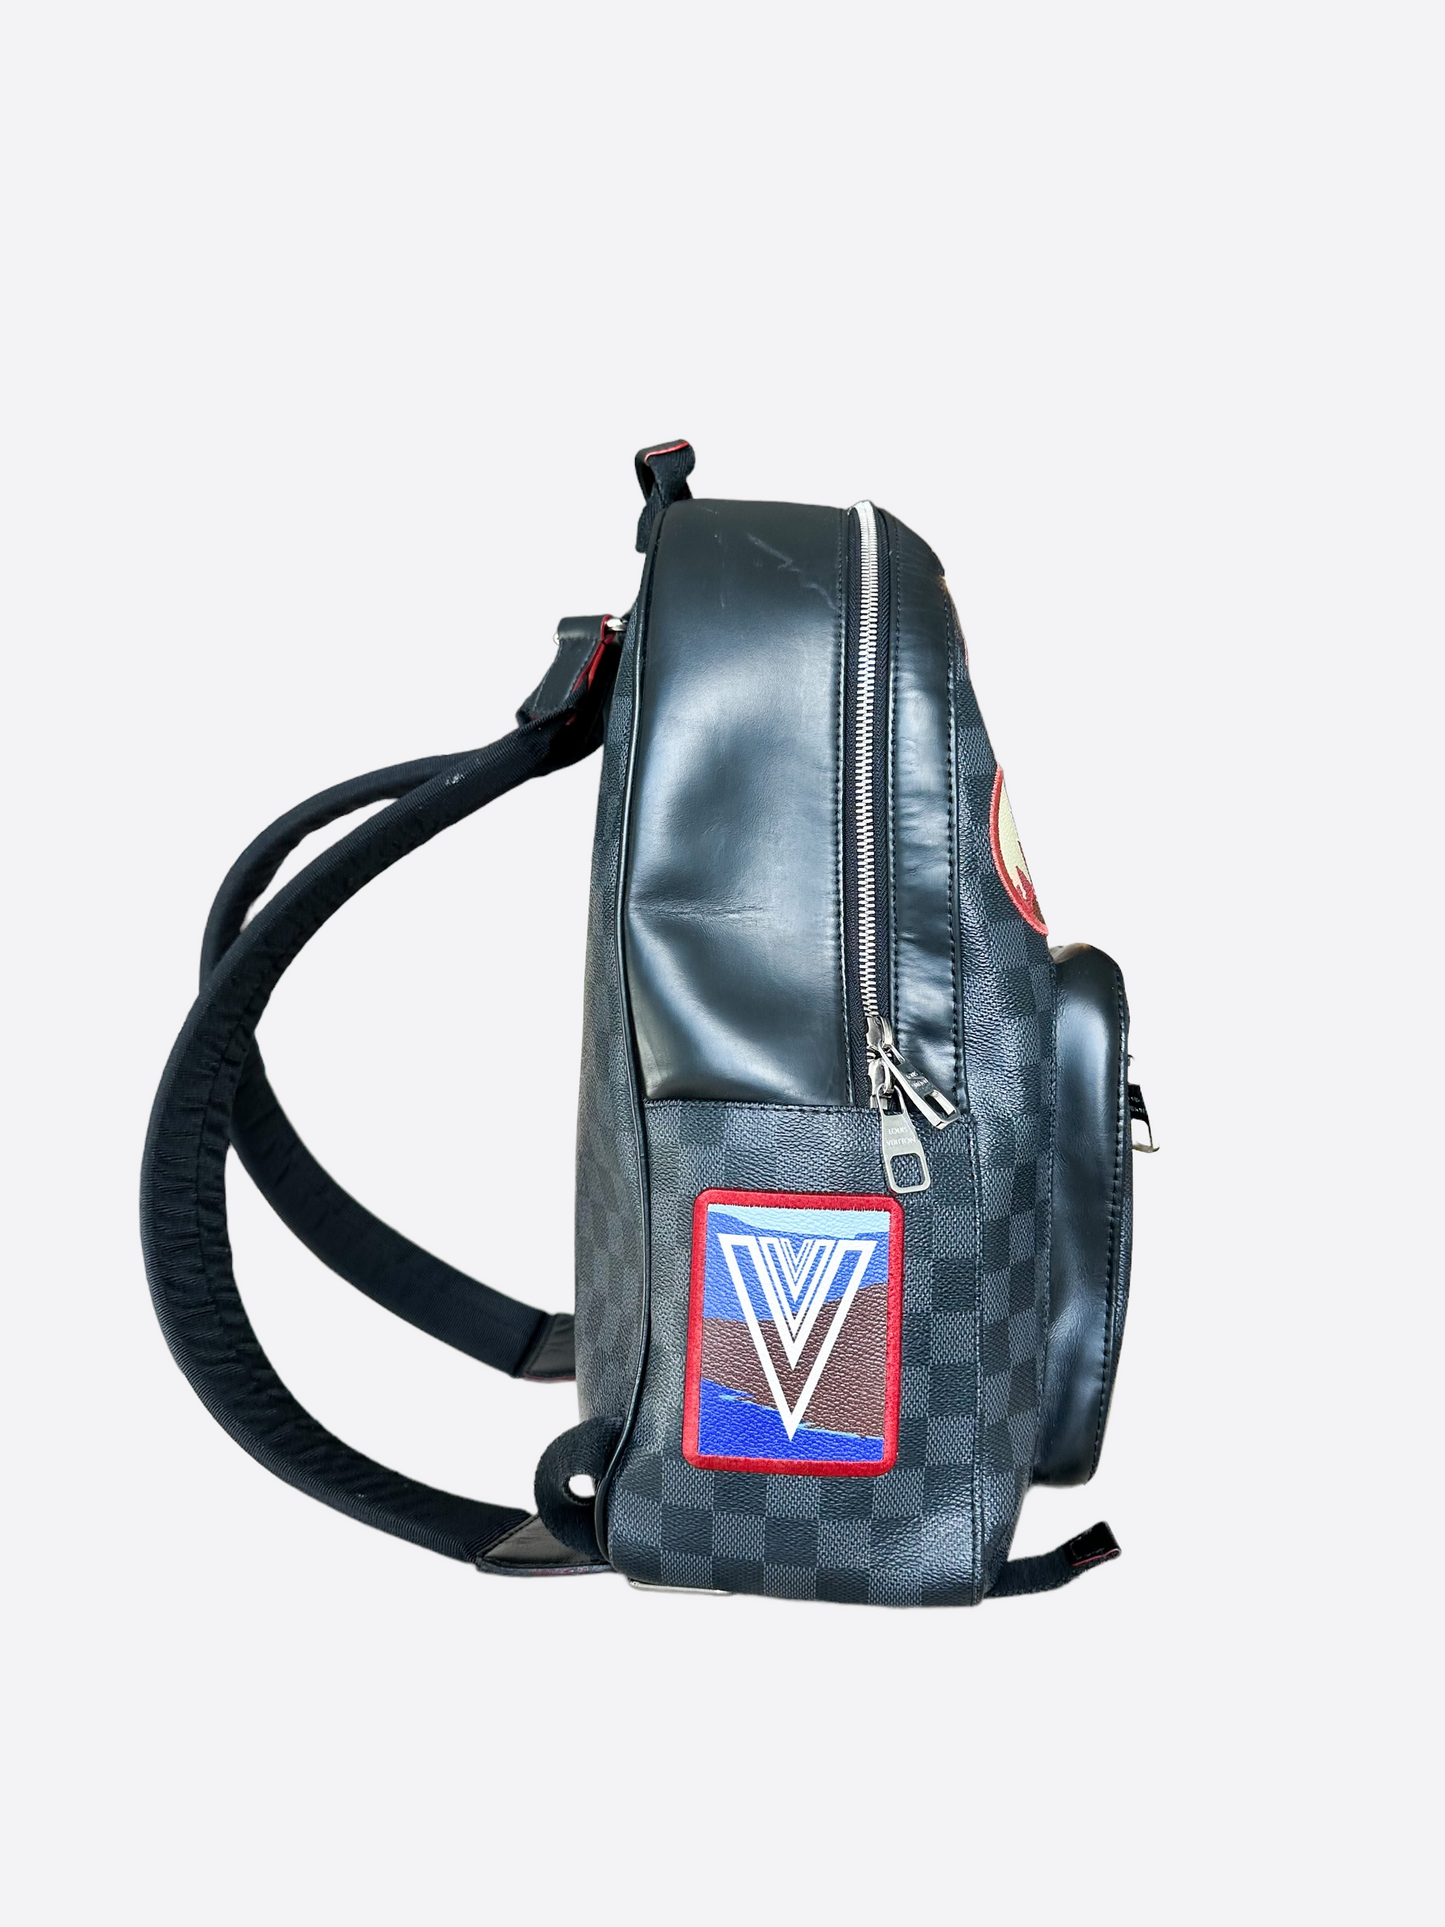 Louis Vuitton Josh Backpack Alps Patches Damier Graphite